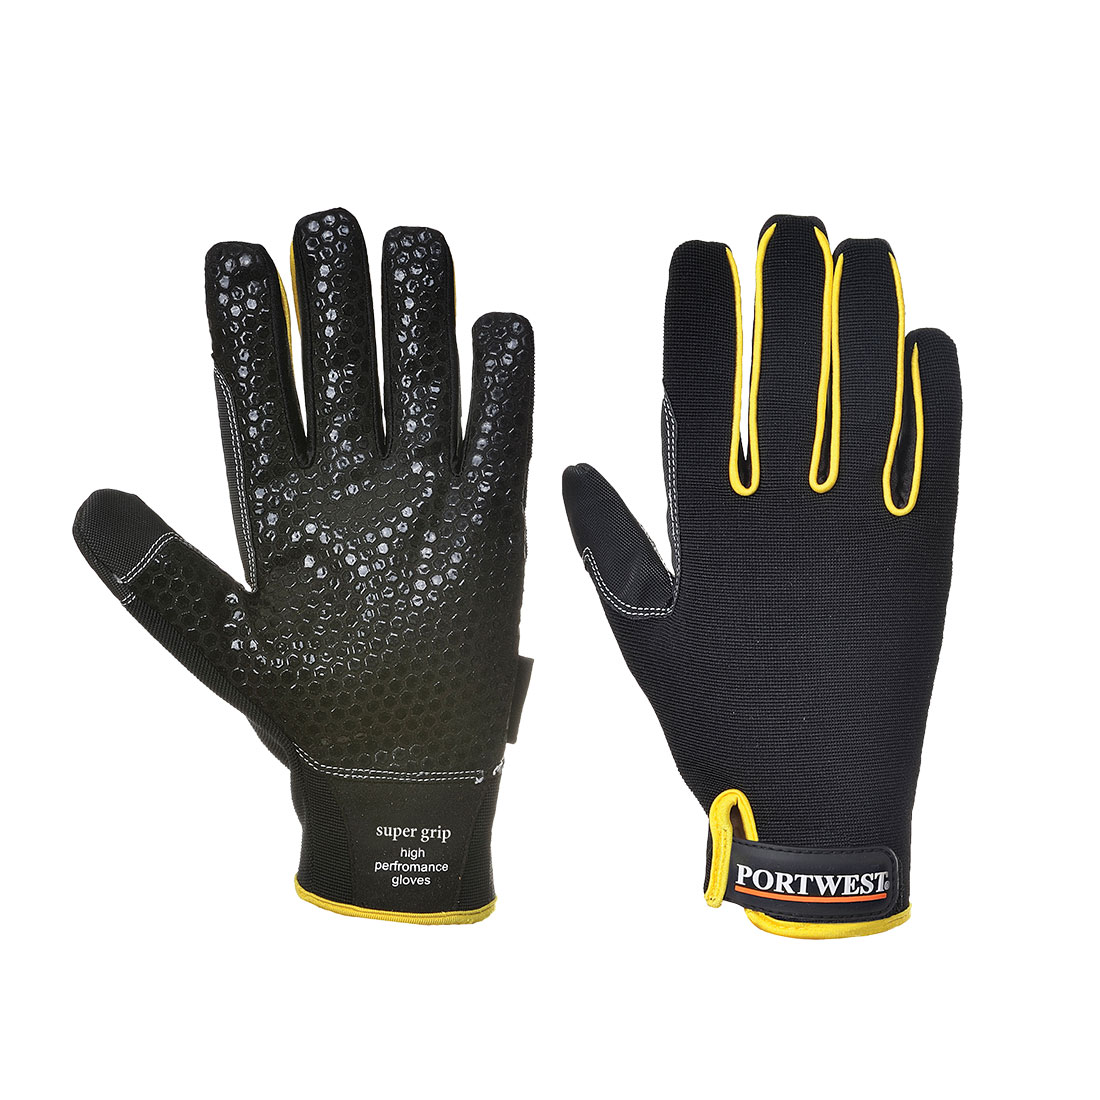 Portwest A730 - Supergrip - High Performance Gloves